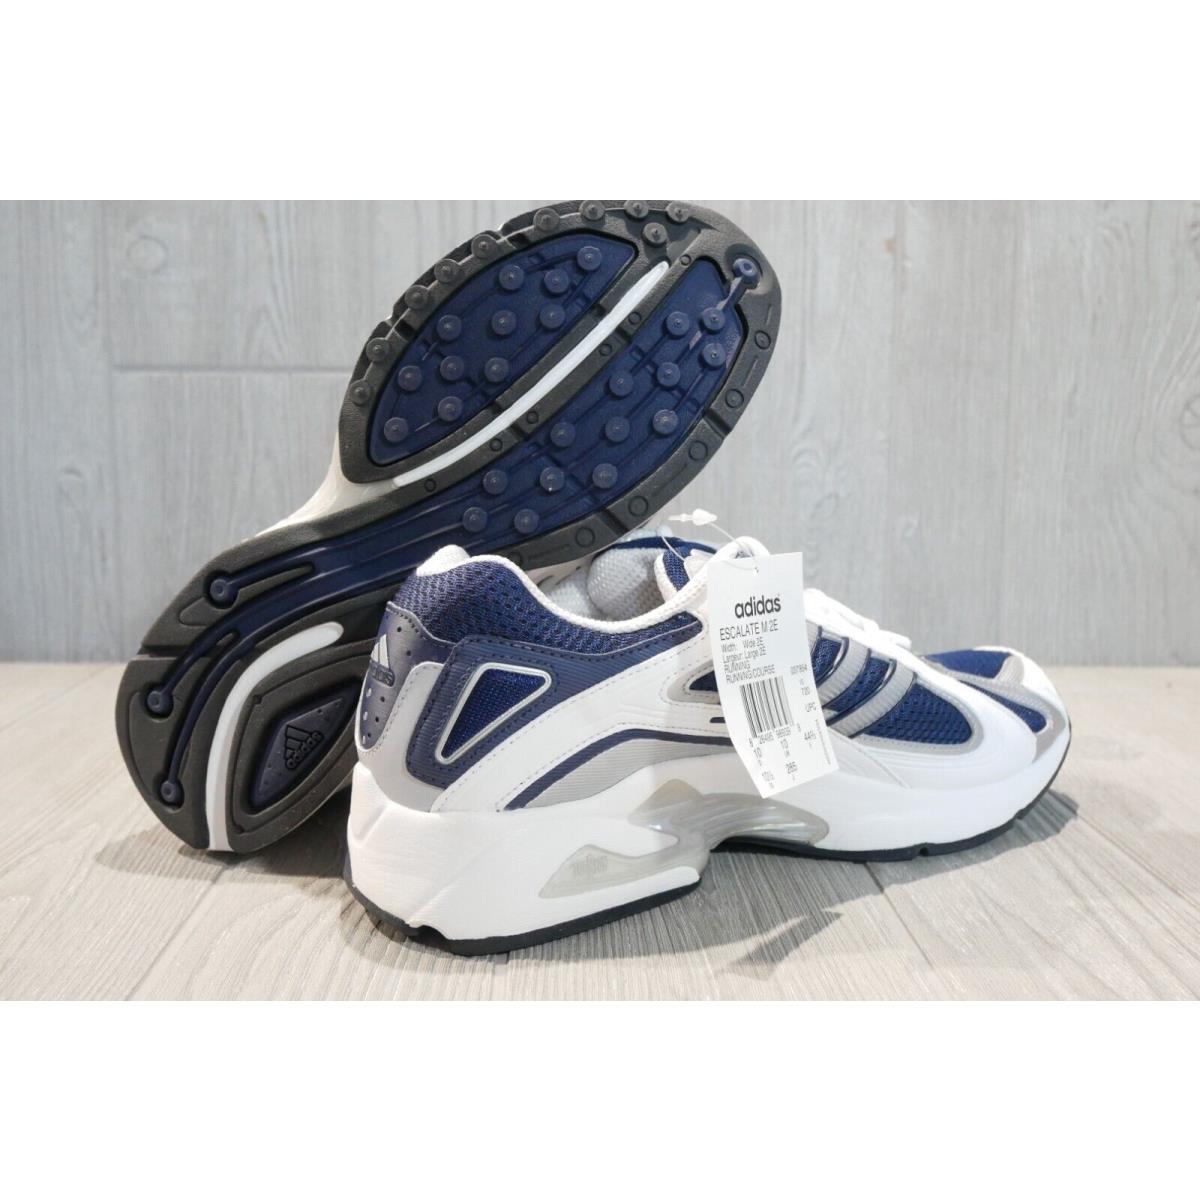 Adidas shoes Vintage - Blue 4